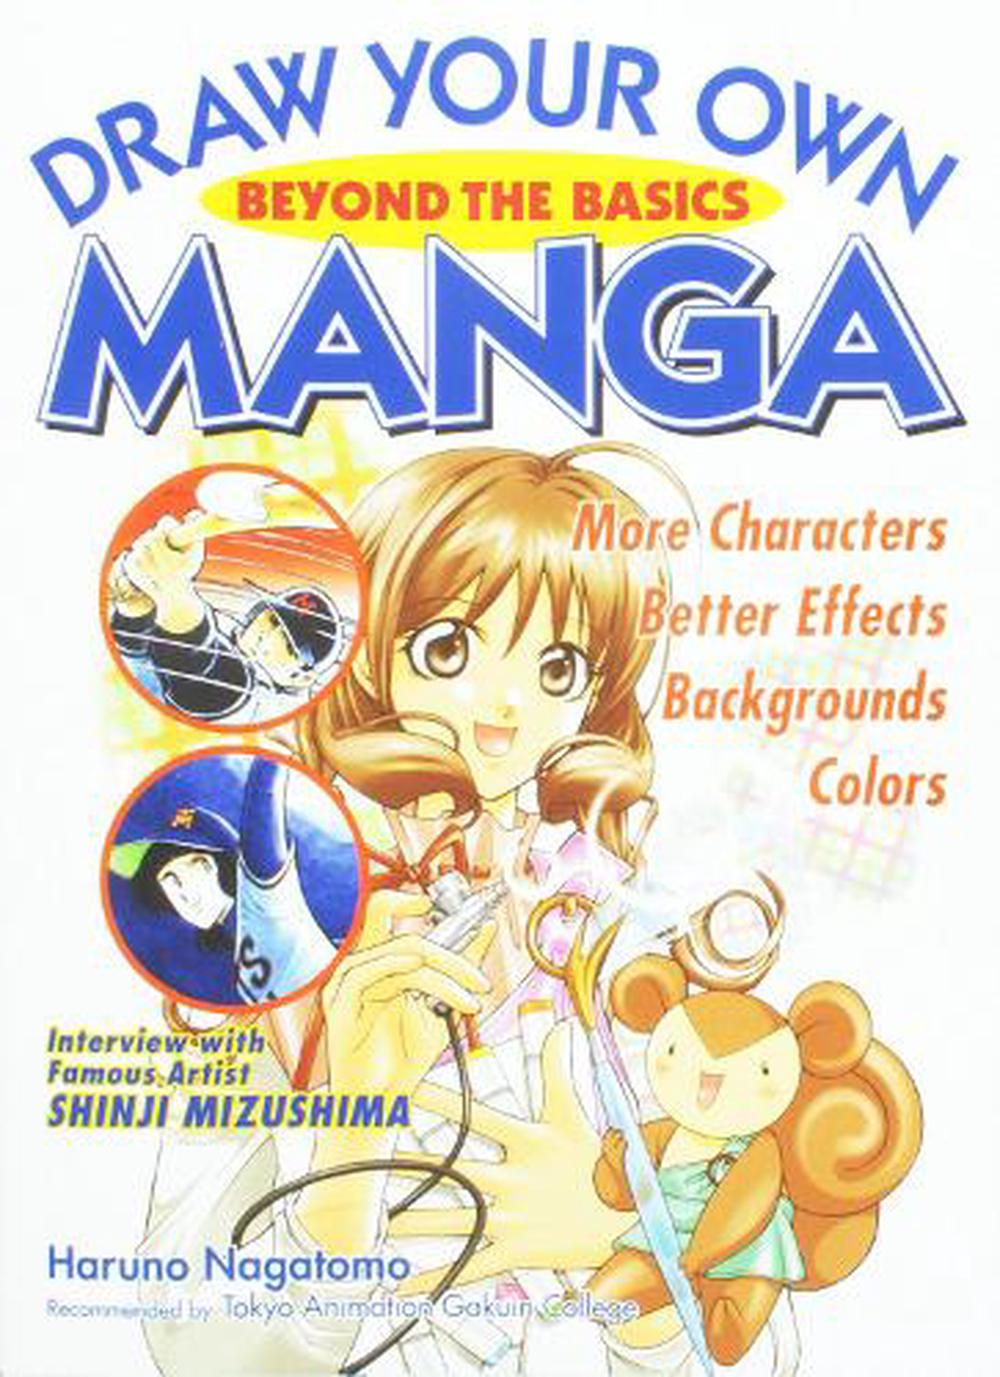 Draw Your Own Manga Beyond the Basics by Haruno Nagatomo